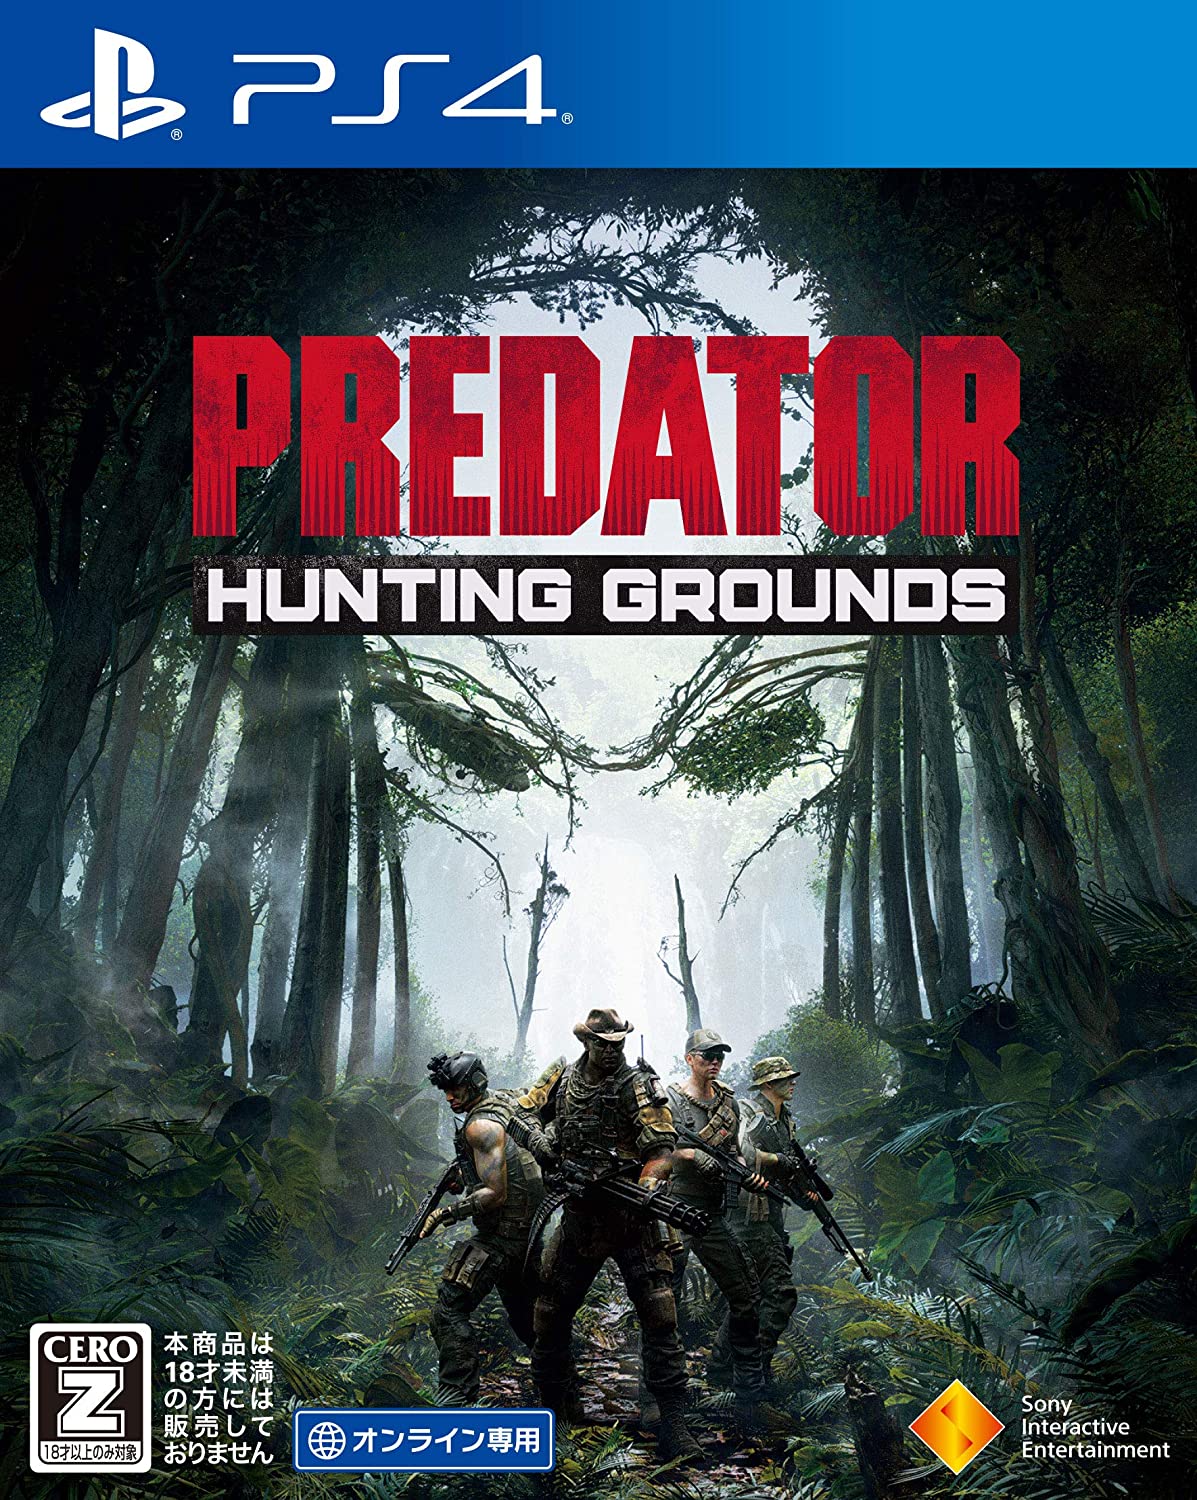 yzyÁzPS4 PlayStation 4 Predator: Hunting Grounds yCERO[eBOuZvzyICpz